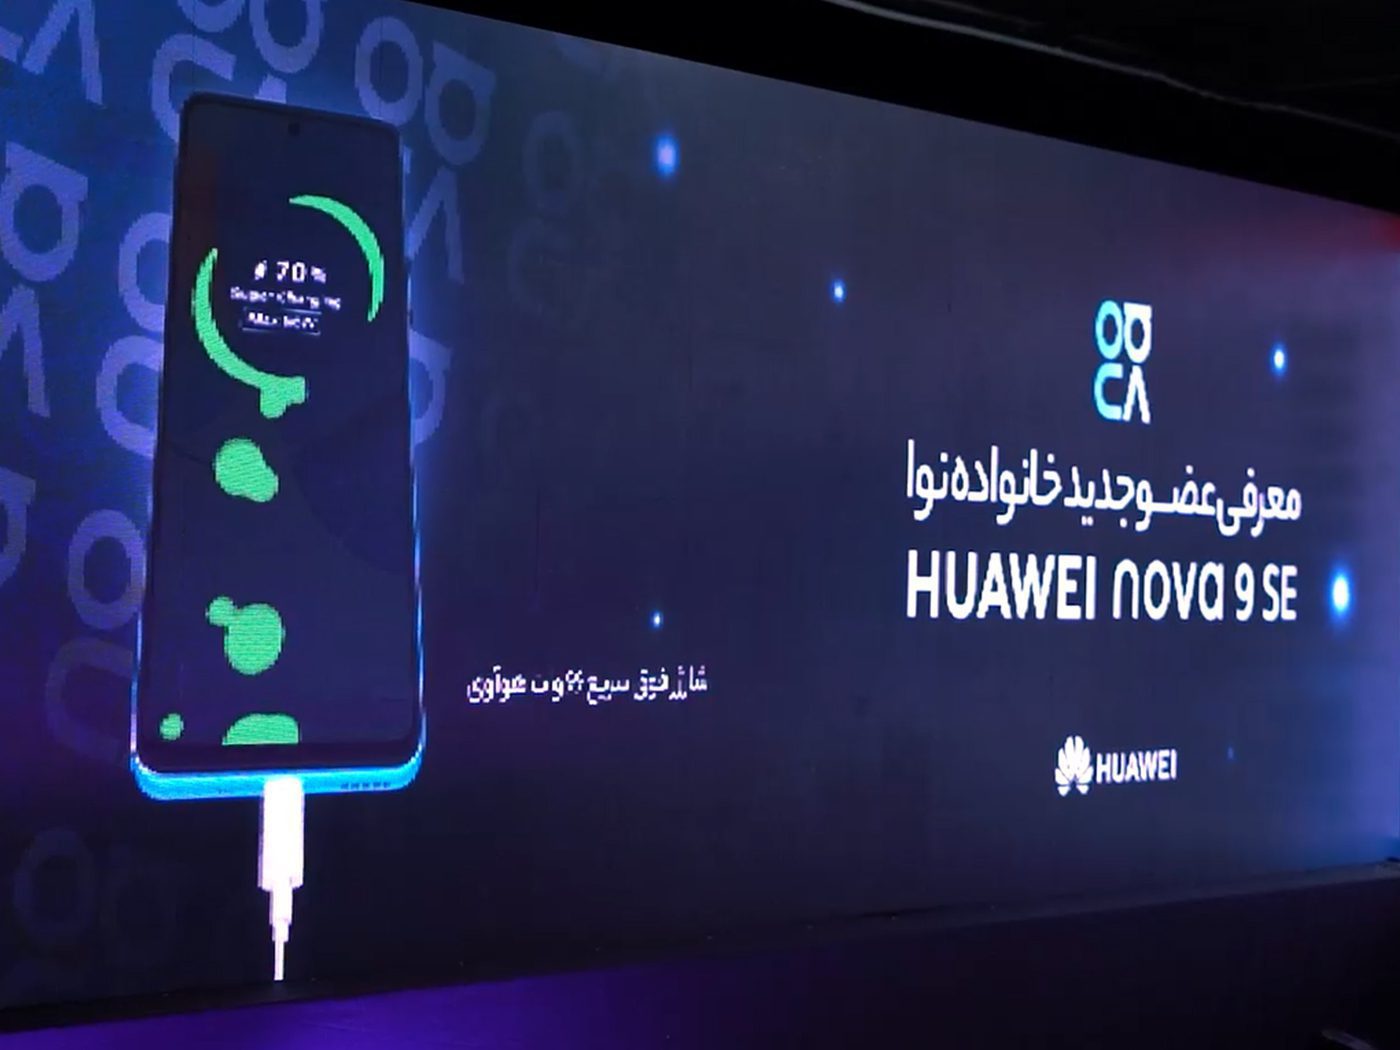 Huawei-Nova9se-video-cover